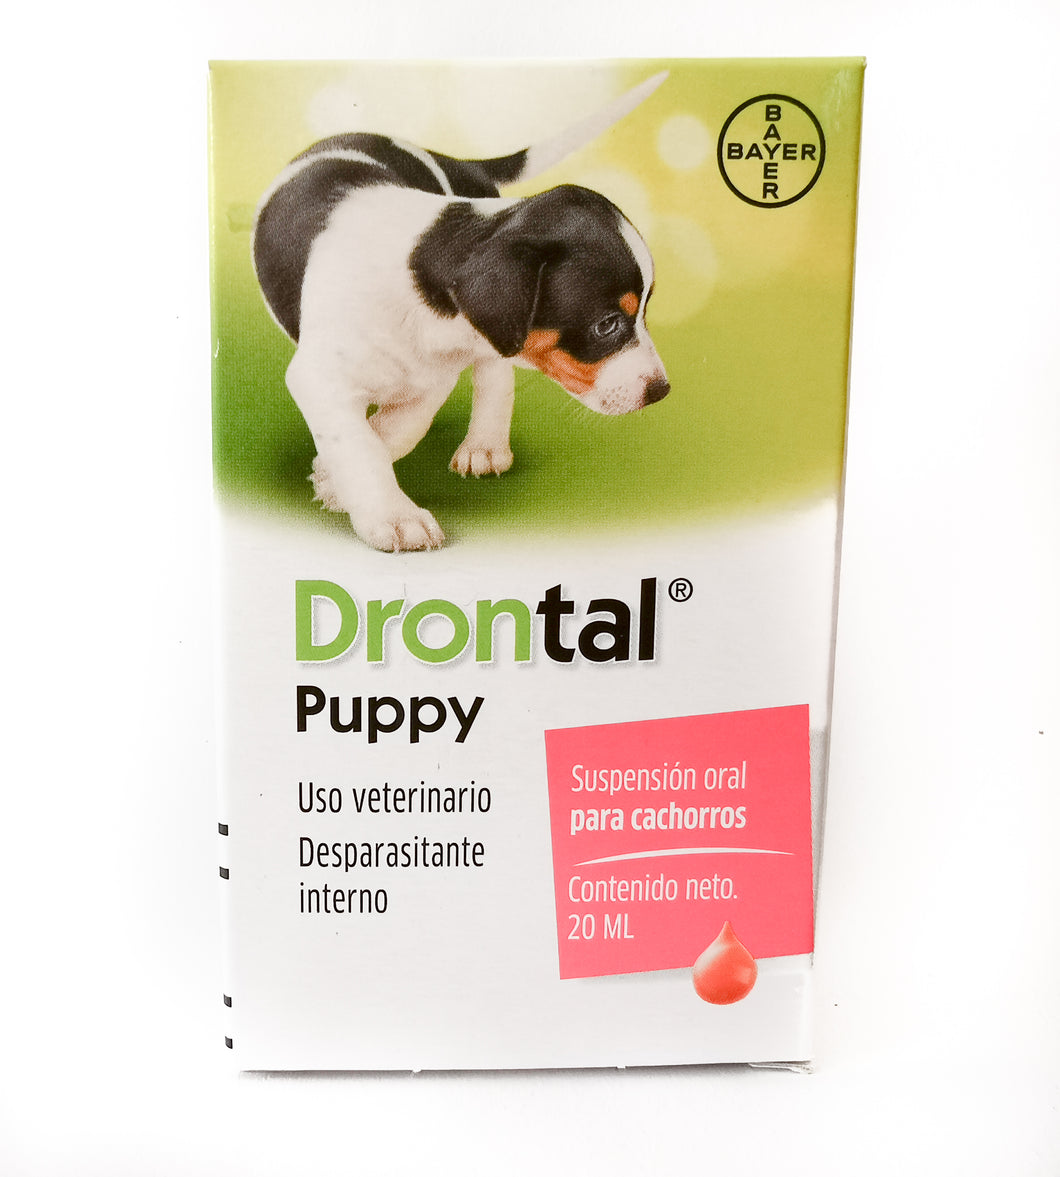 Desparasitante Drontal puppy 20ml